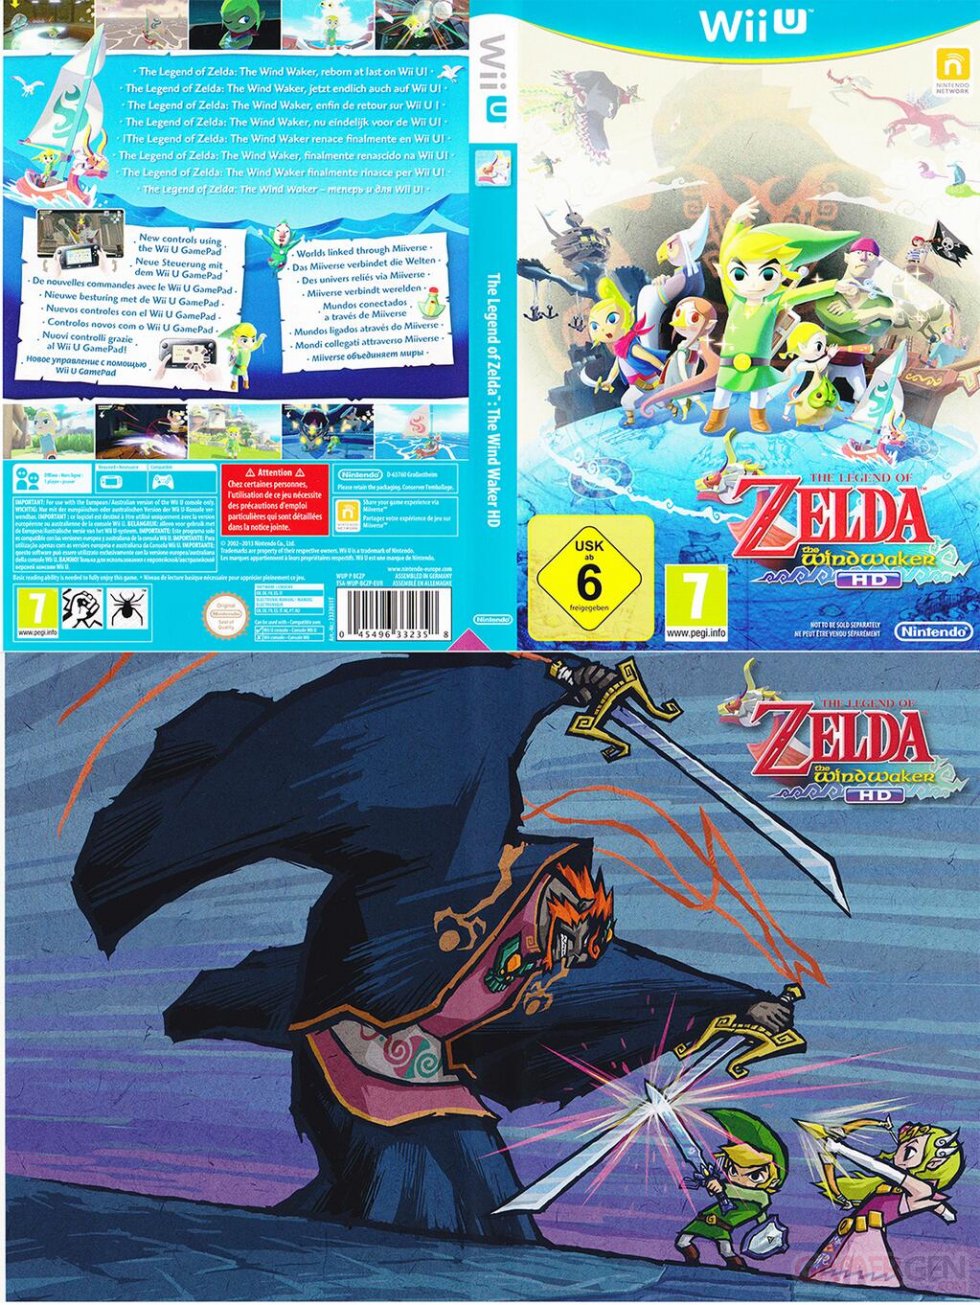 The Legend of Zelda The Wind Waker HD jaquete reversible 02.10.2013.